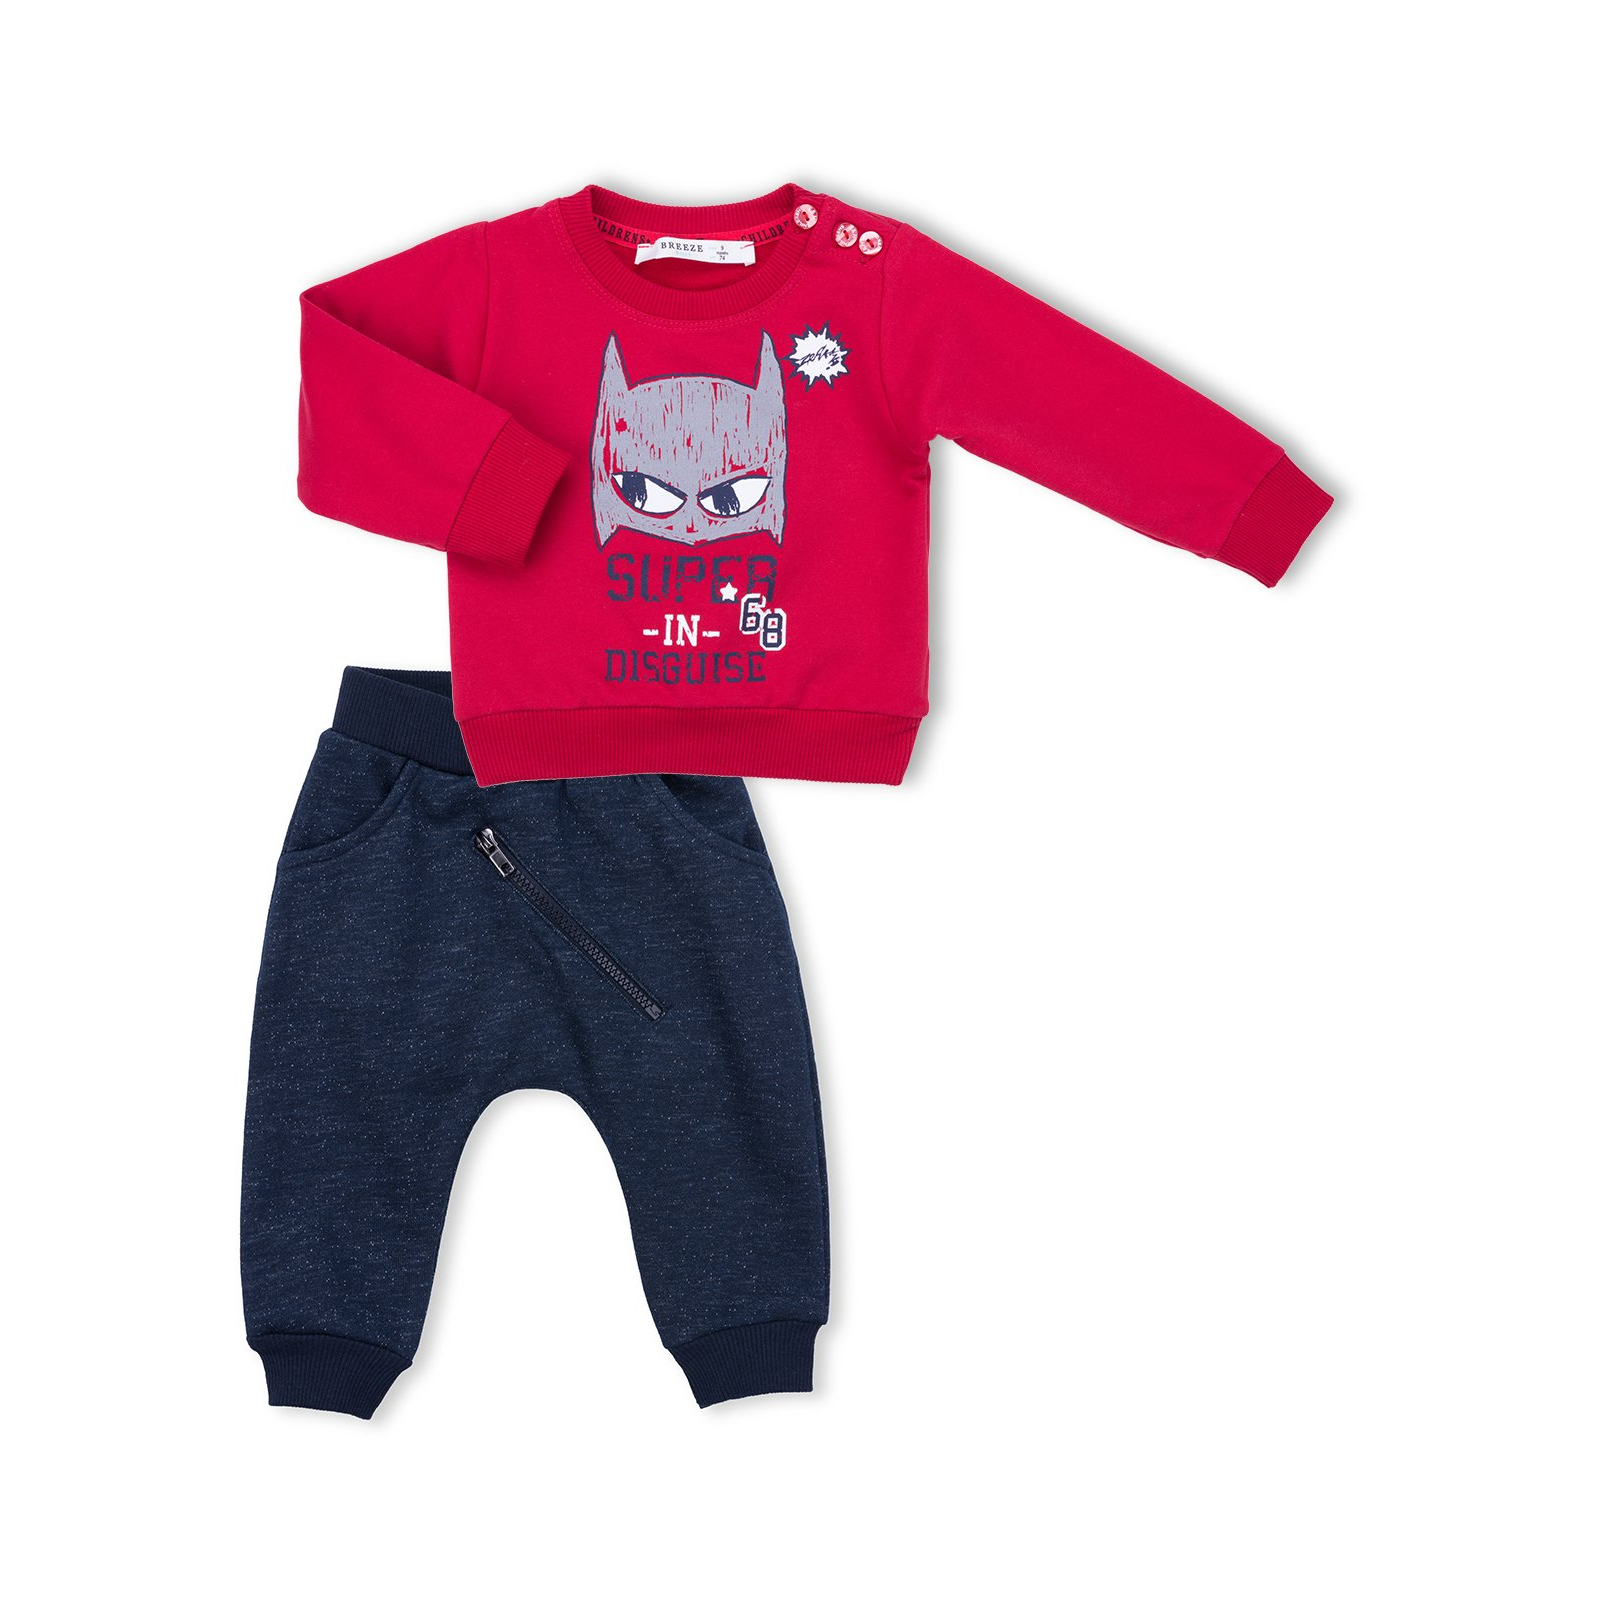 Набор детской одежды Breeze "Super in disguise" (10419-92B-red)